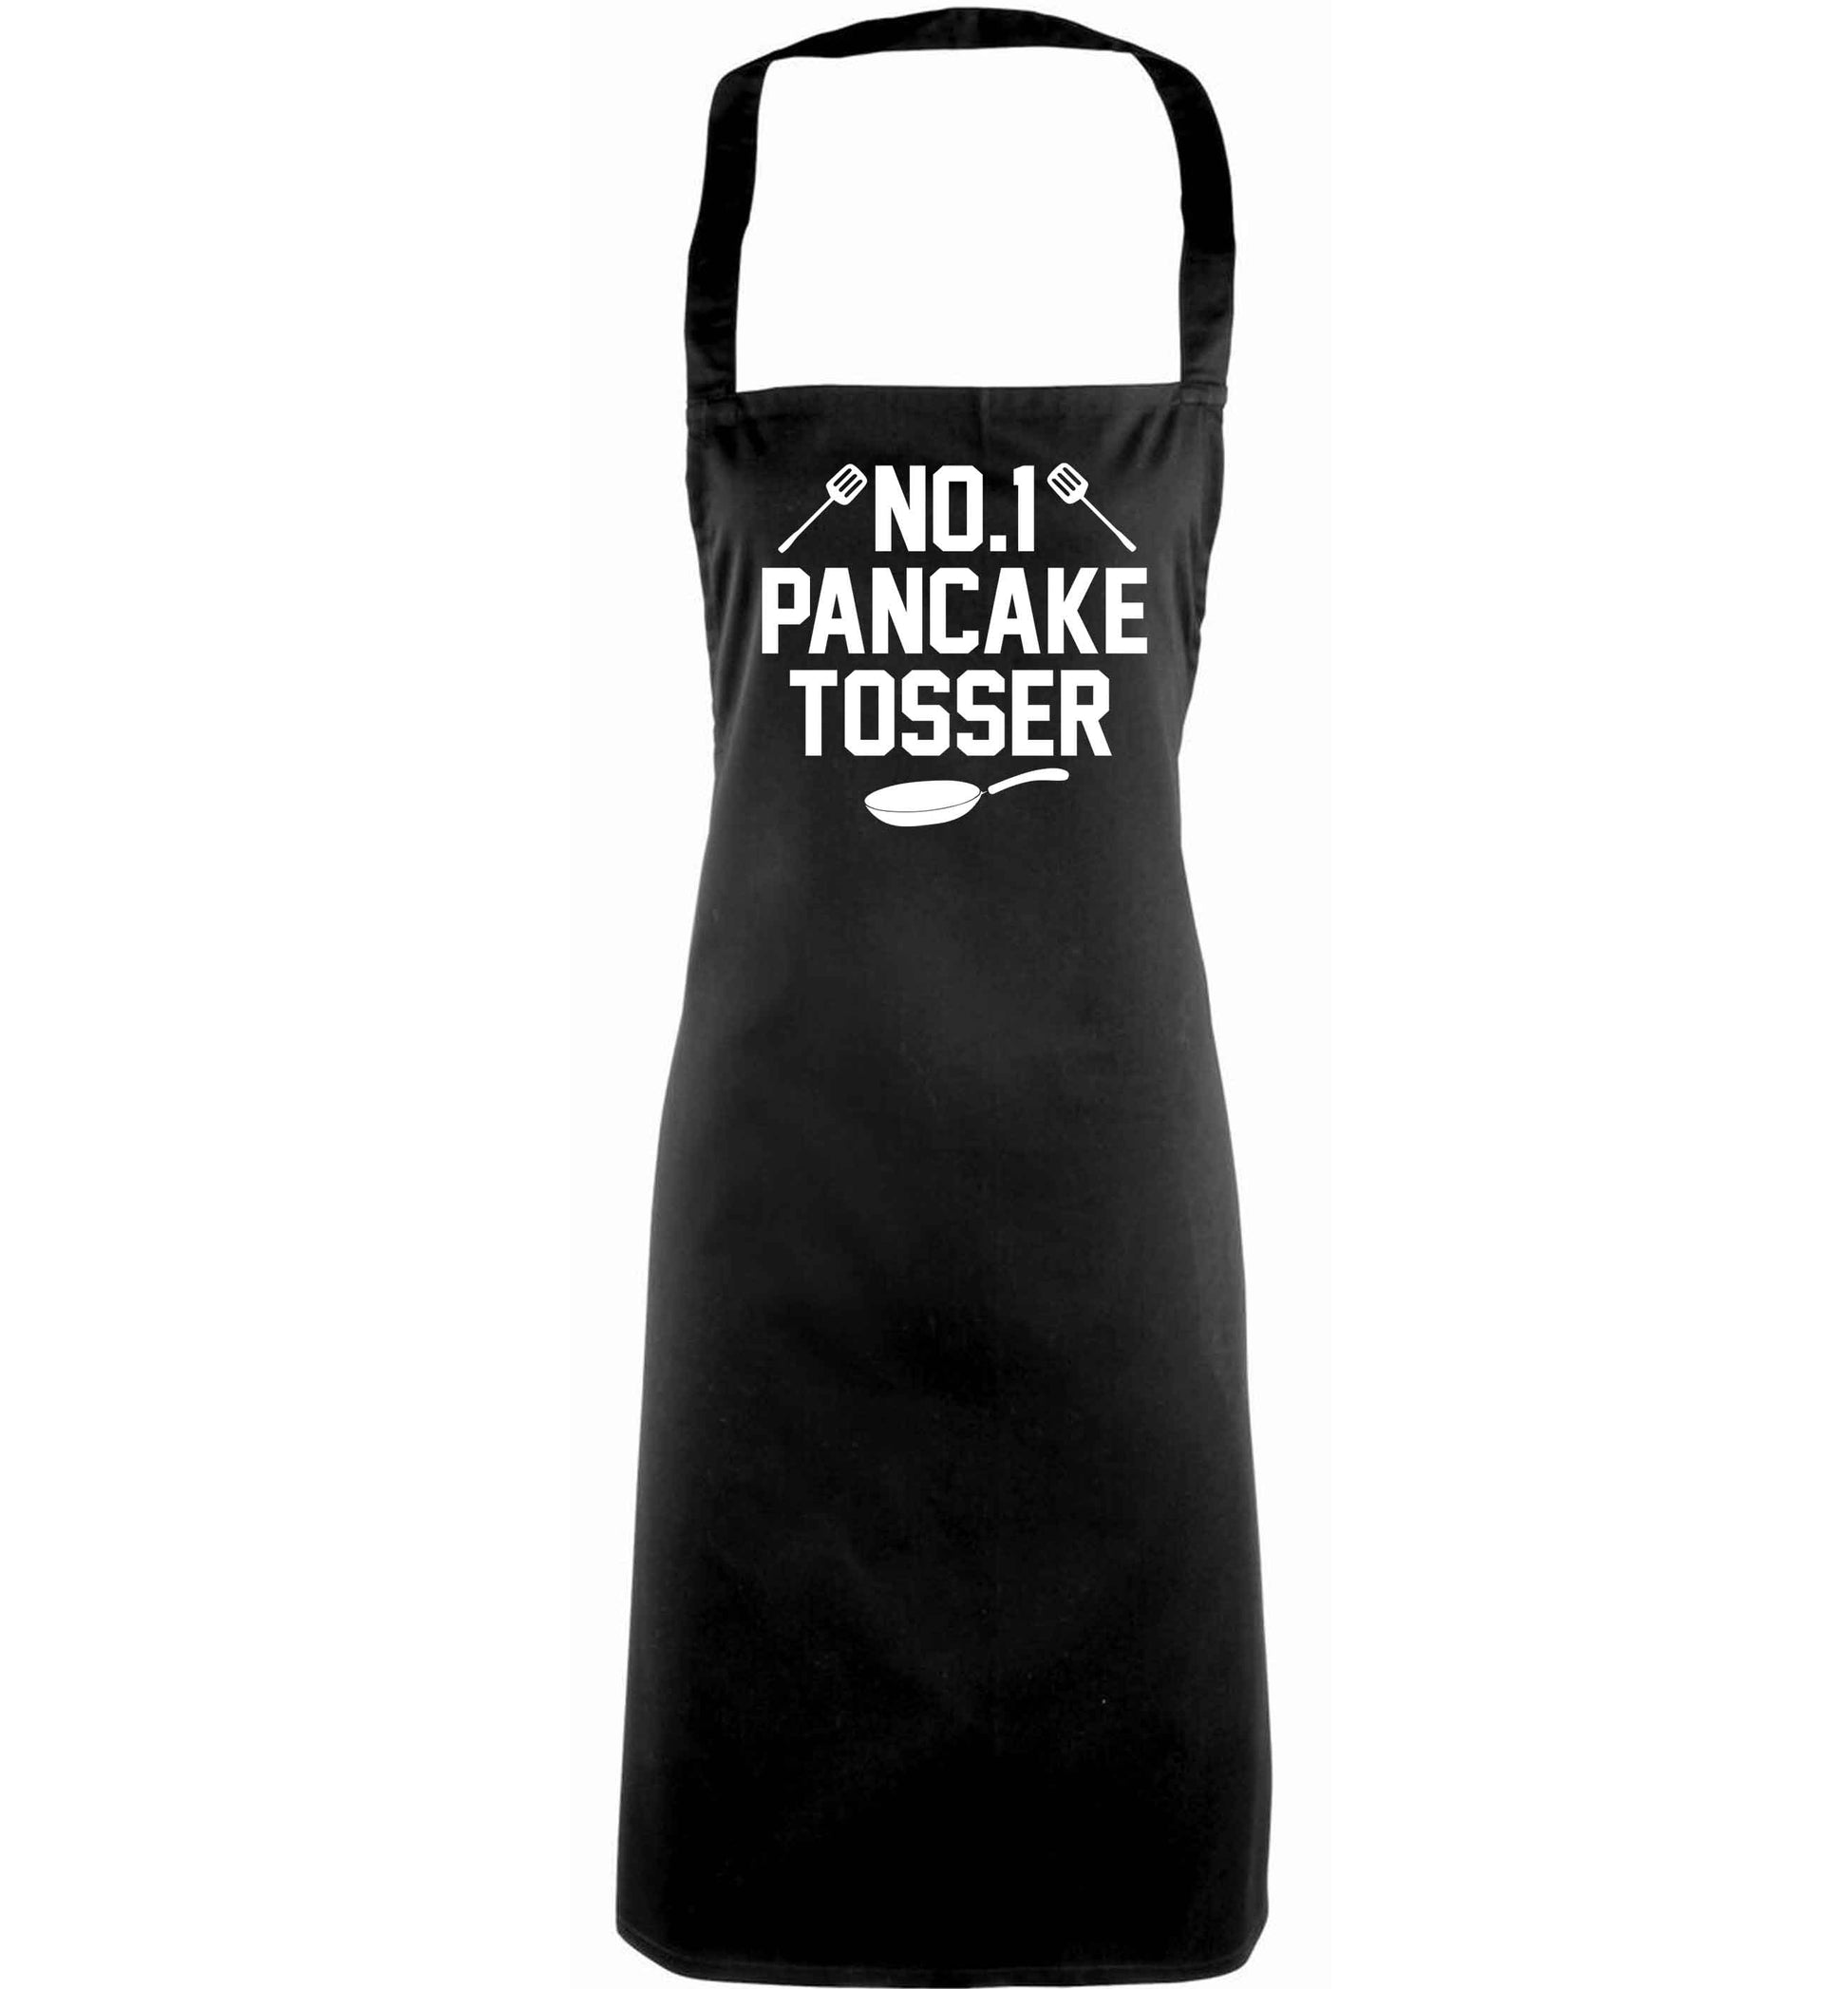 No.1 Pancake tosser adults black apron